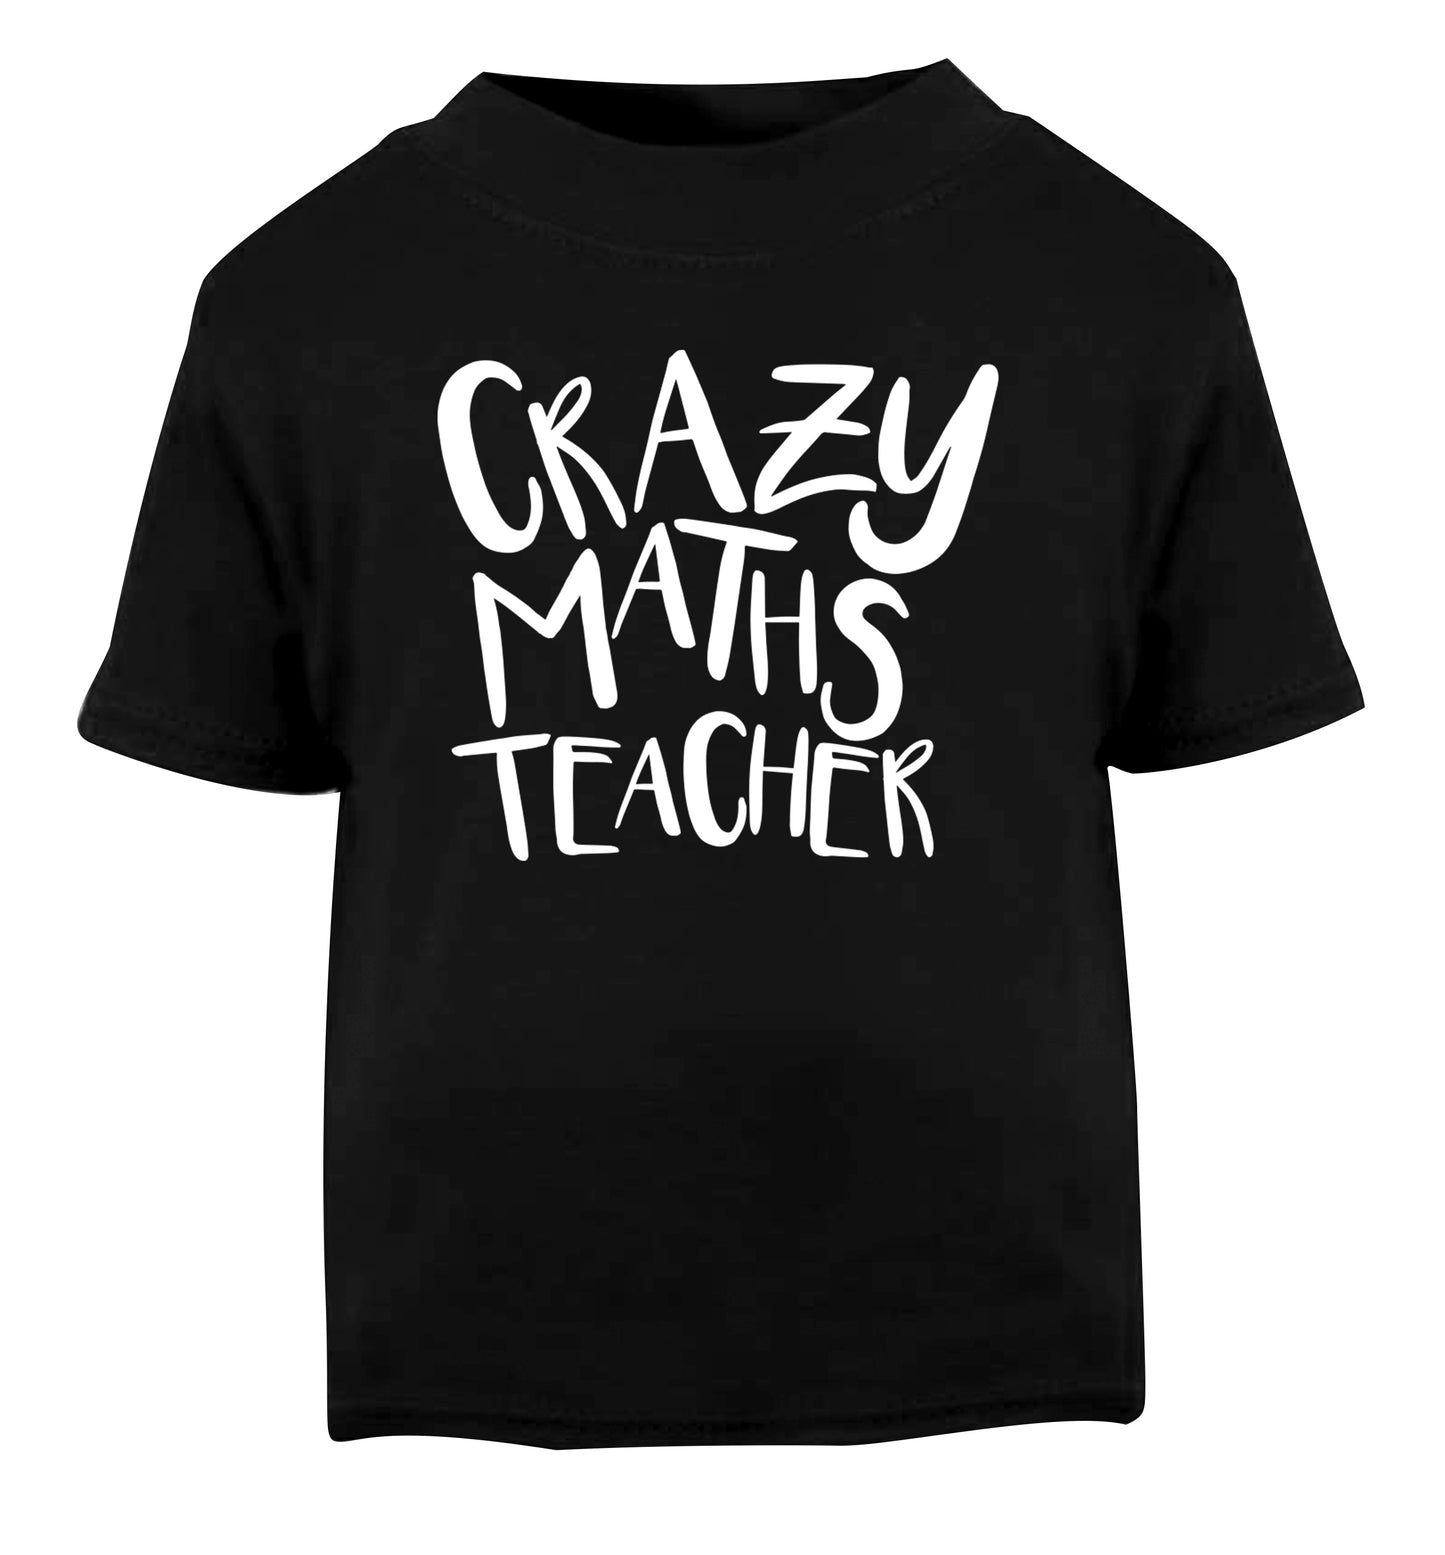 Crazy maths teacher Black Baby Toddler Tshirt 2 years